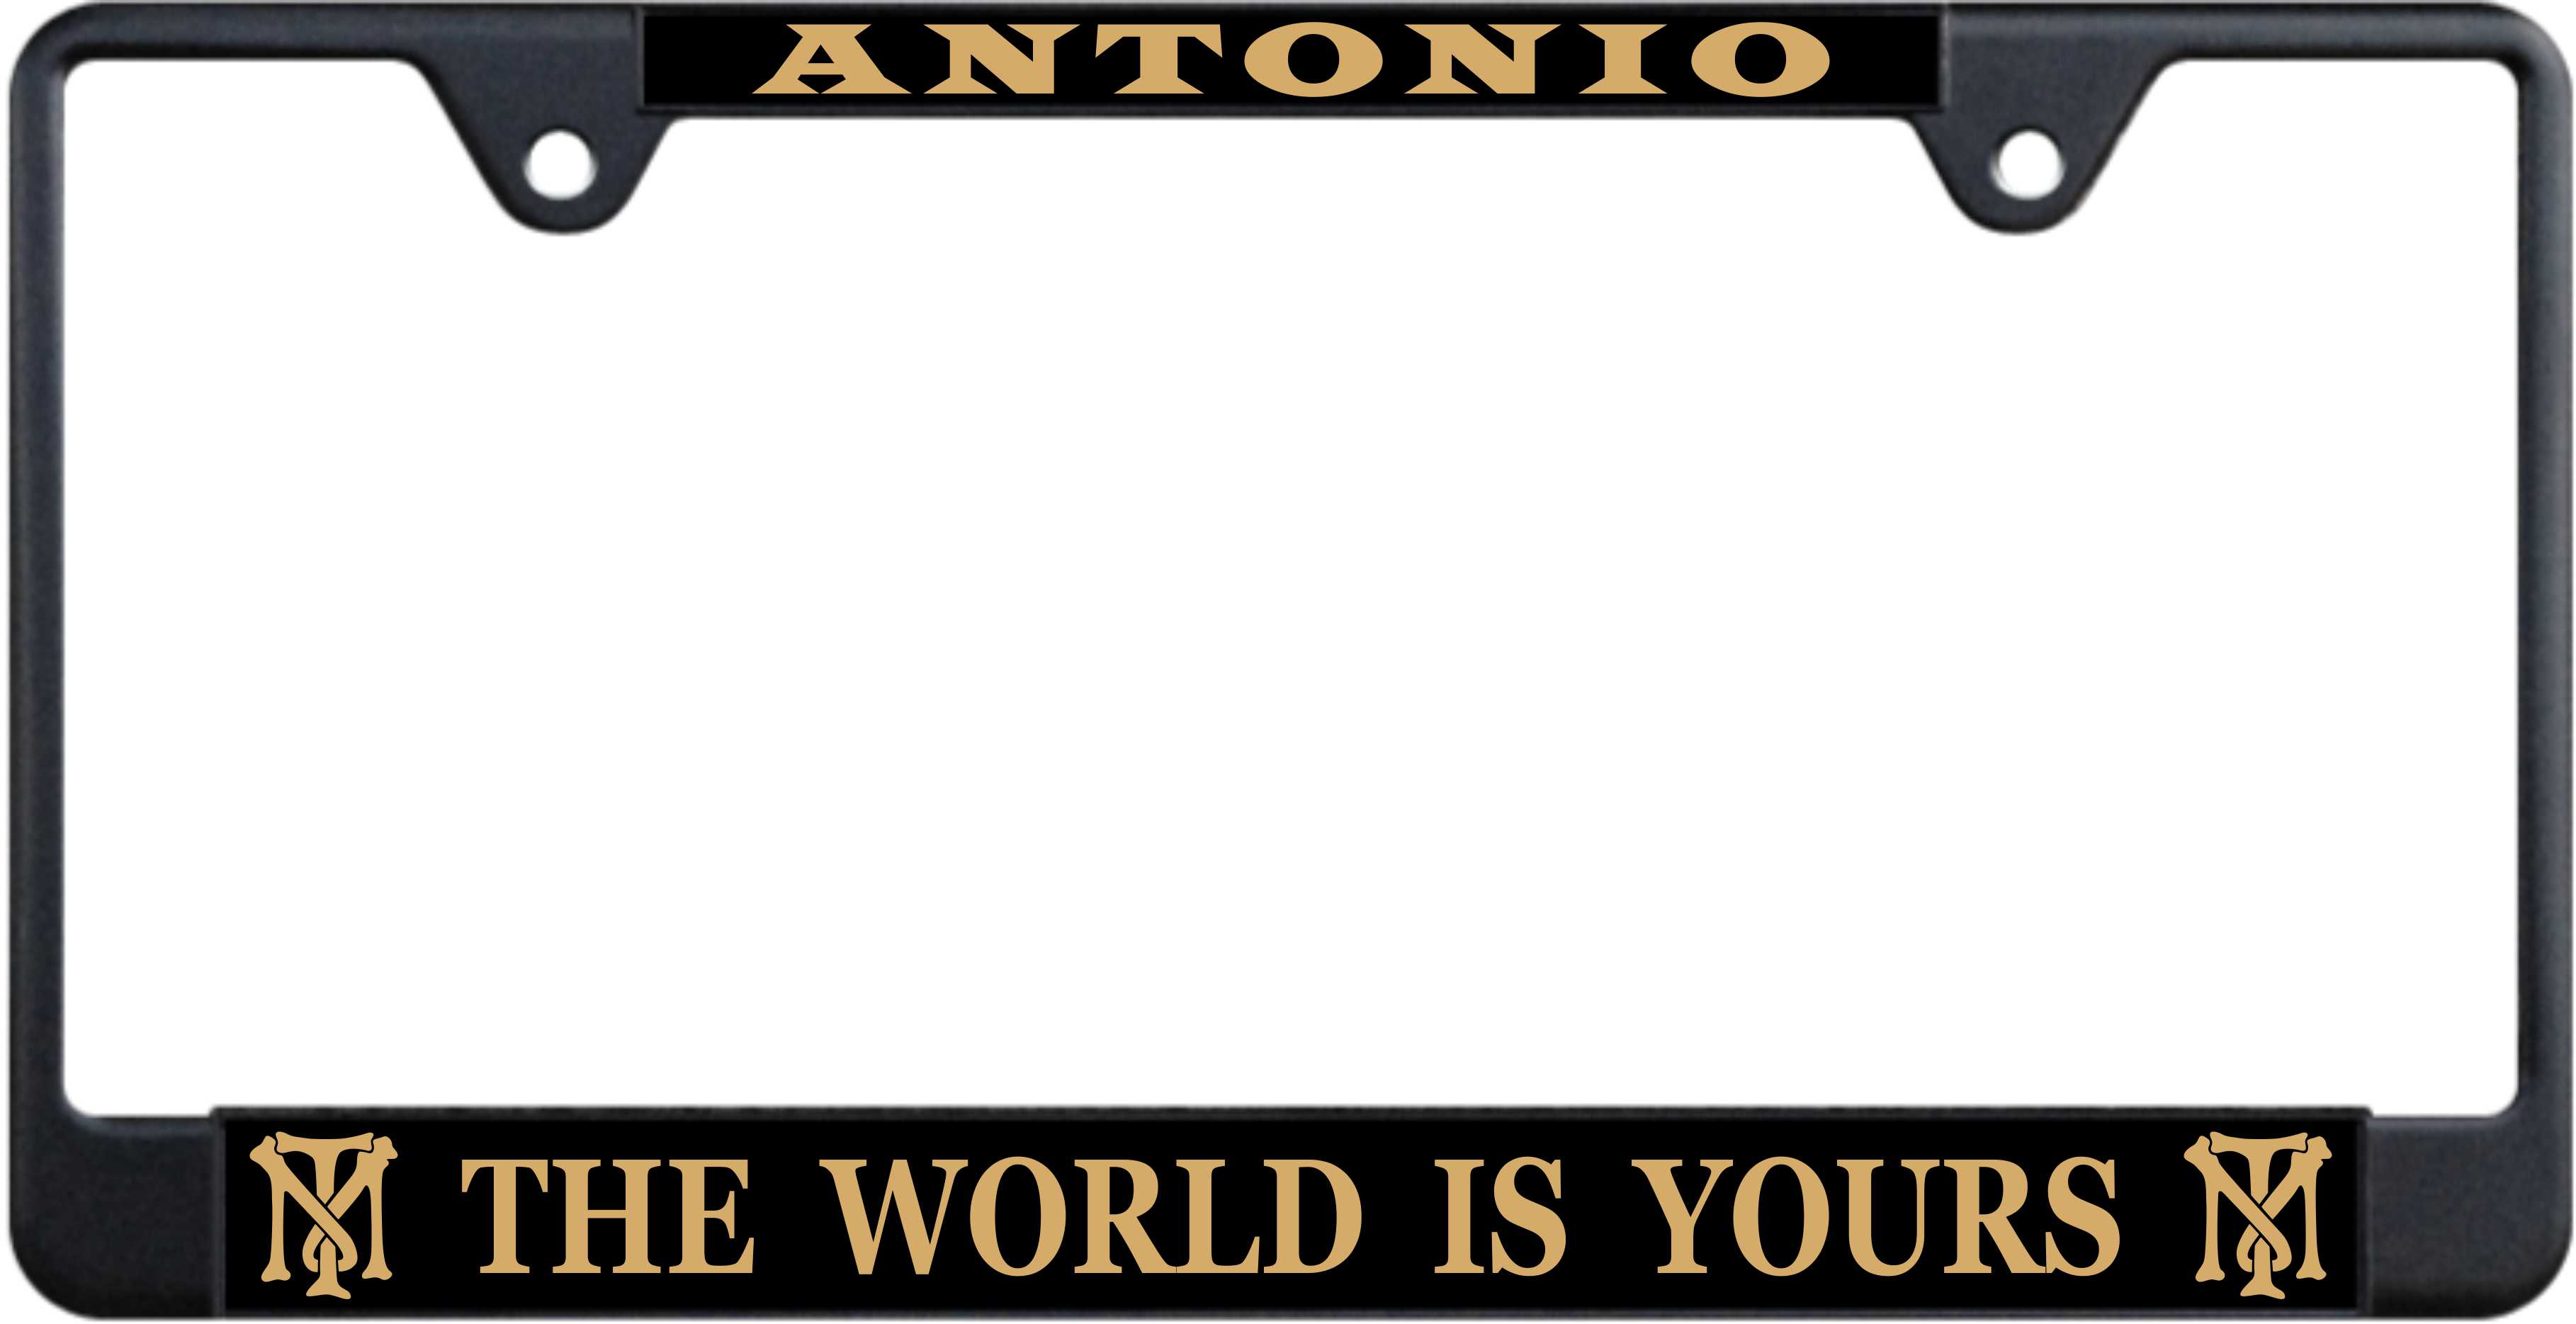 ANTONIO - Custom metal license plate frame